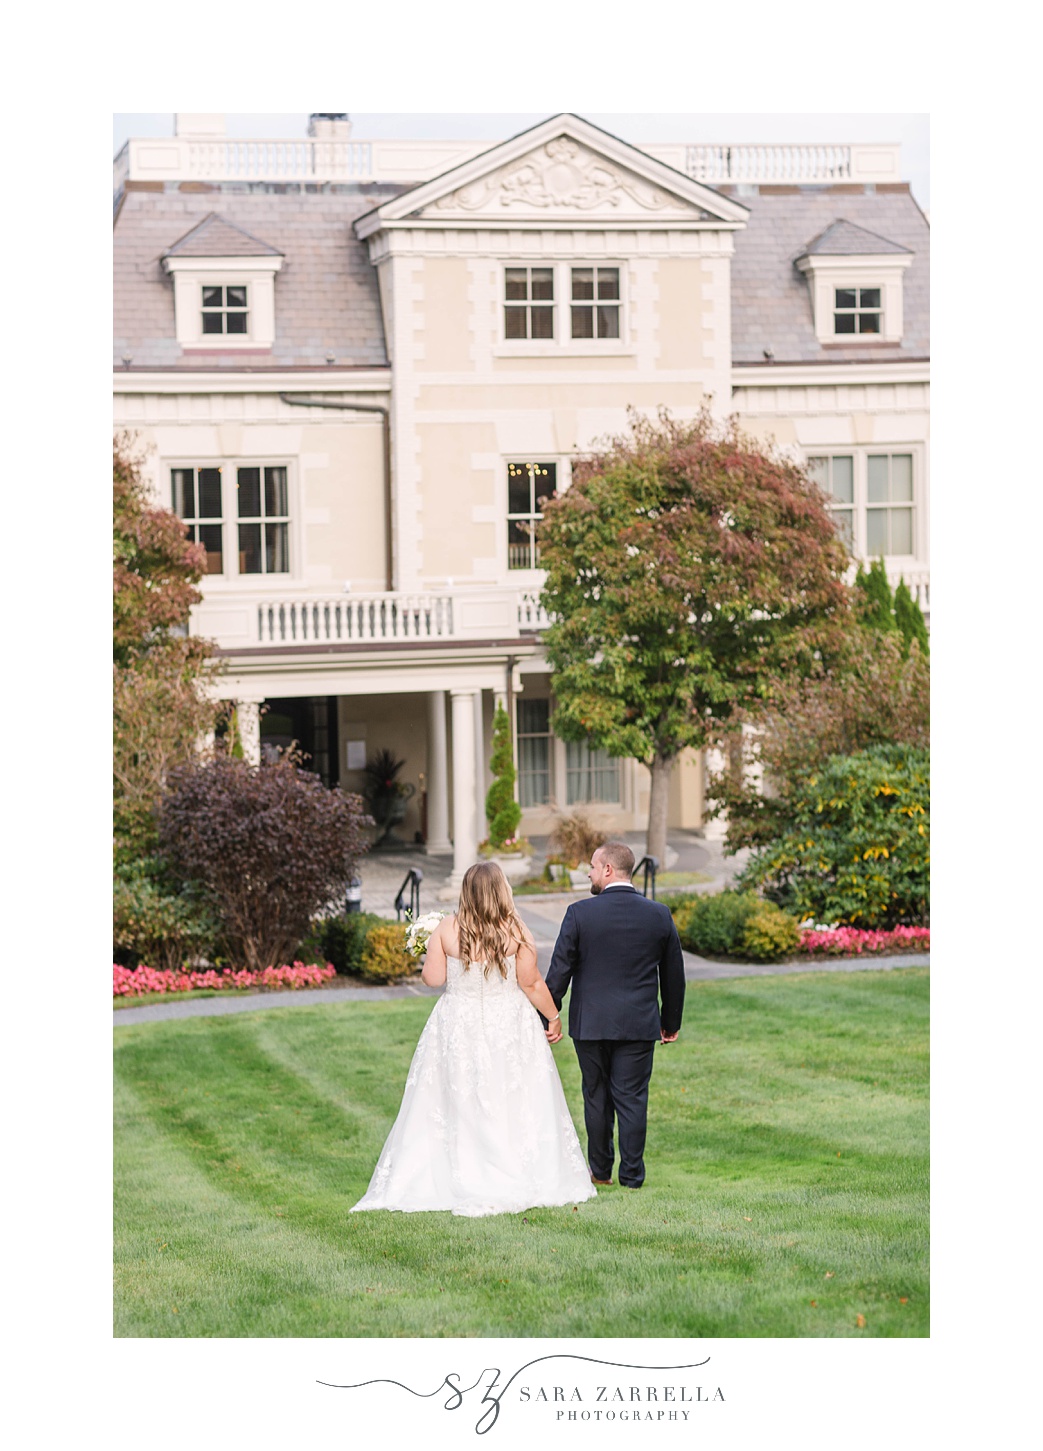 couple walks on lawn in Newport RI before wedding reception